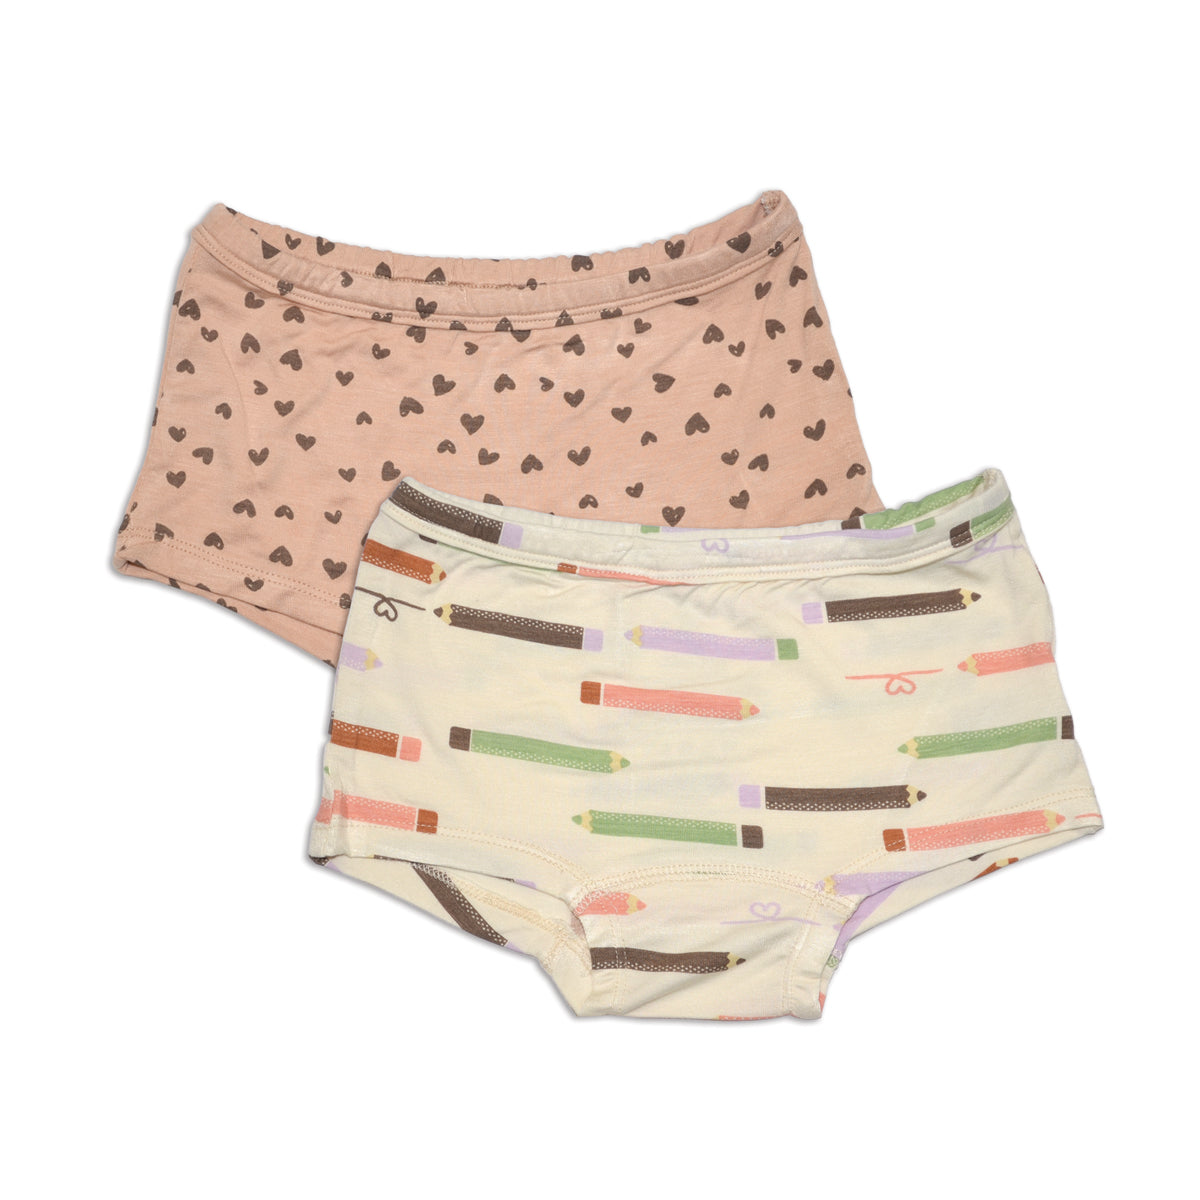 Bamboo Girls Bikini Underwear 3 pack (Pink Lemonade/Lustre/Soft Sand)